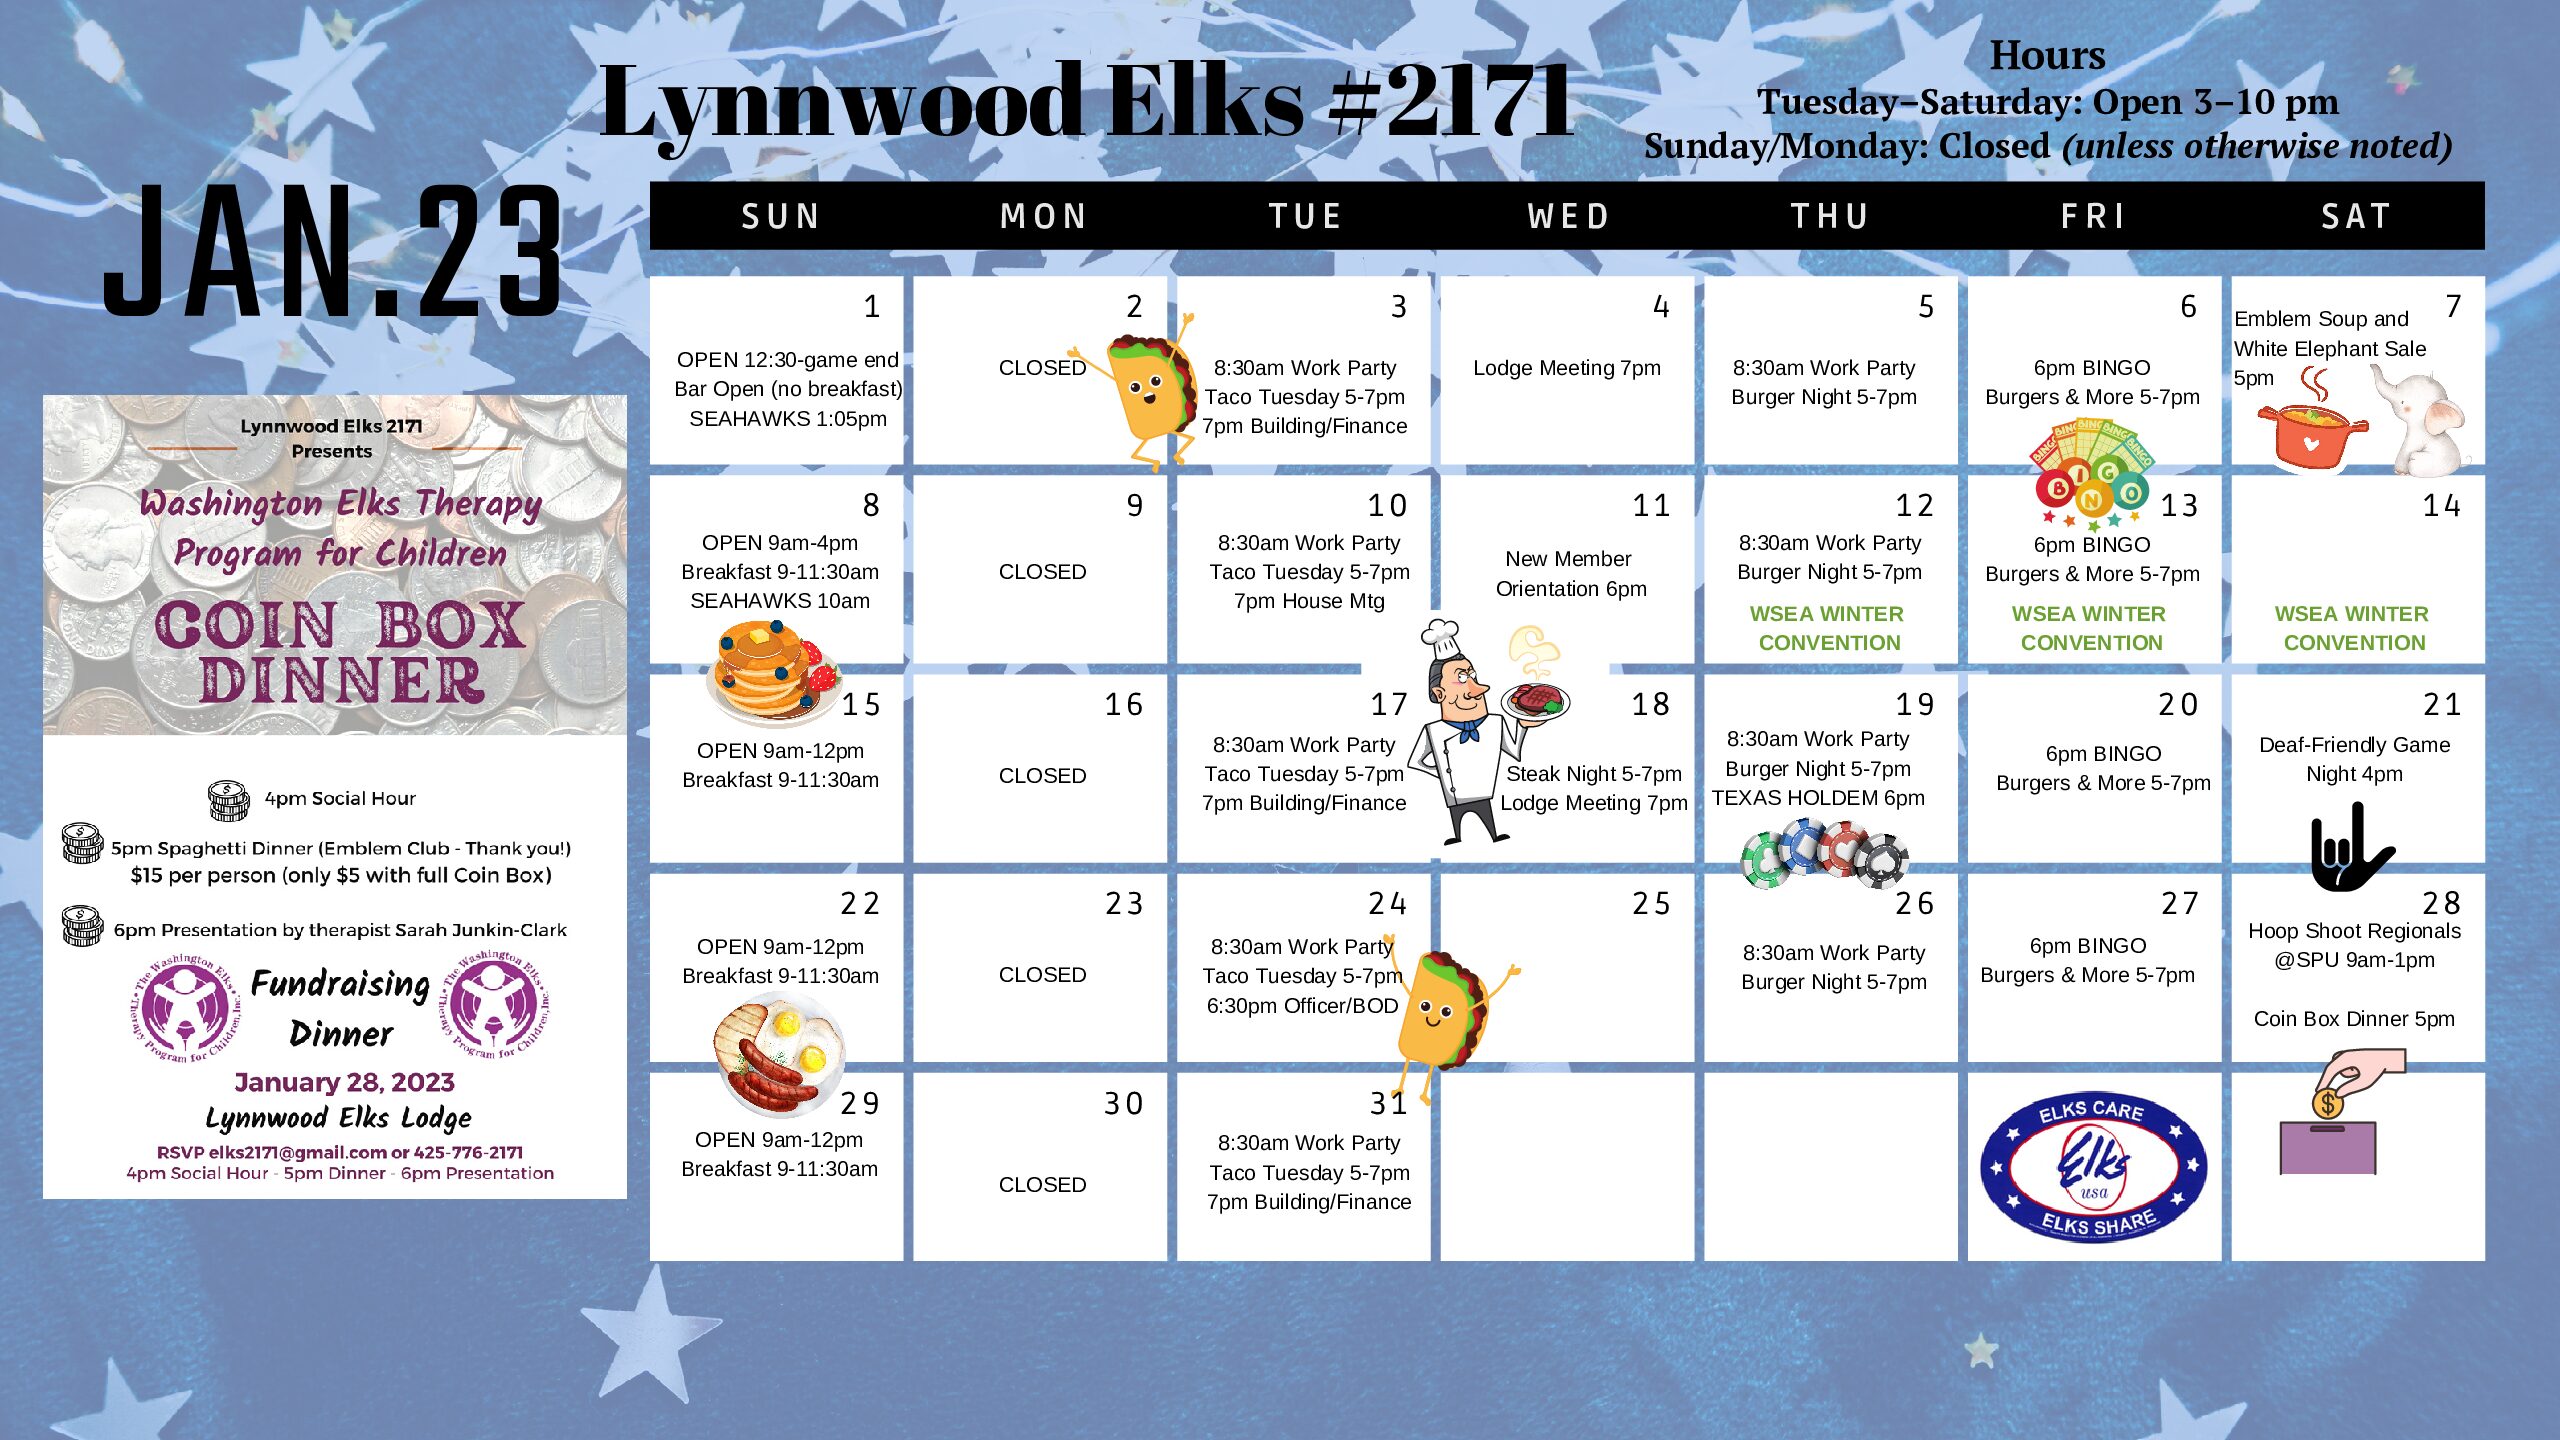 October 2022 Events at Lynnwood Elks #2171